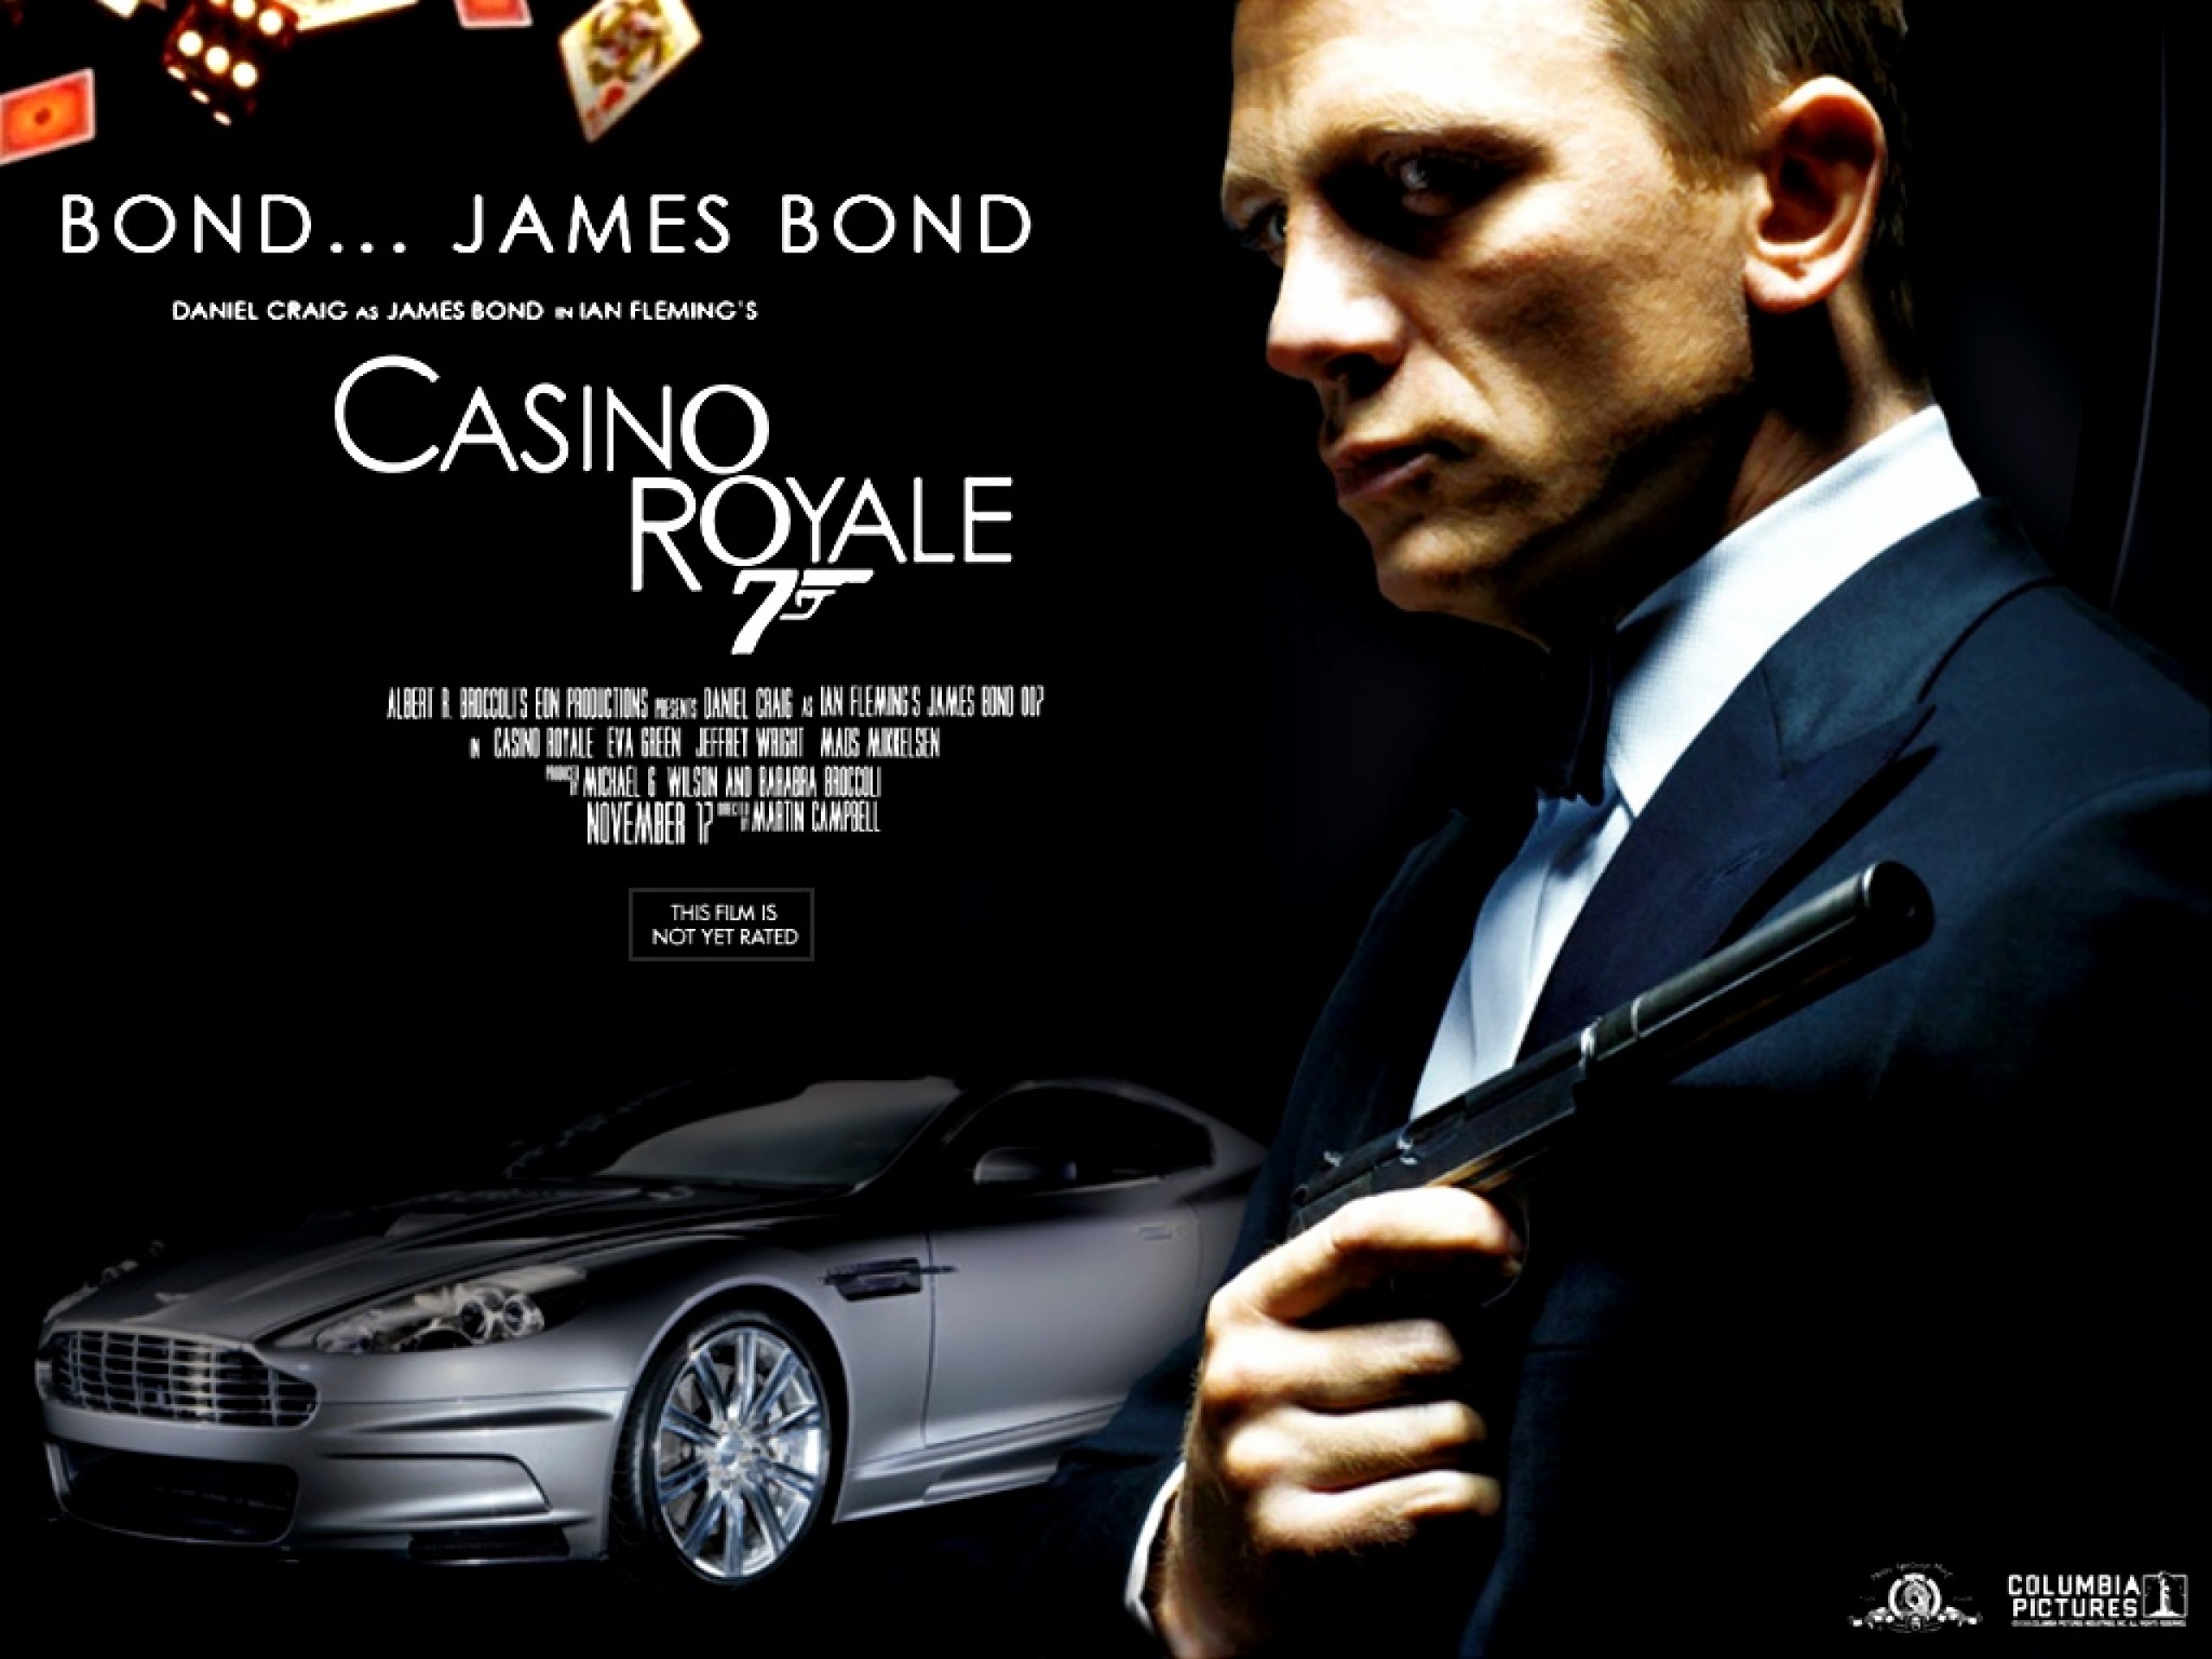 Casino Royale Movie Online